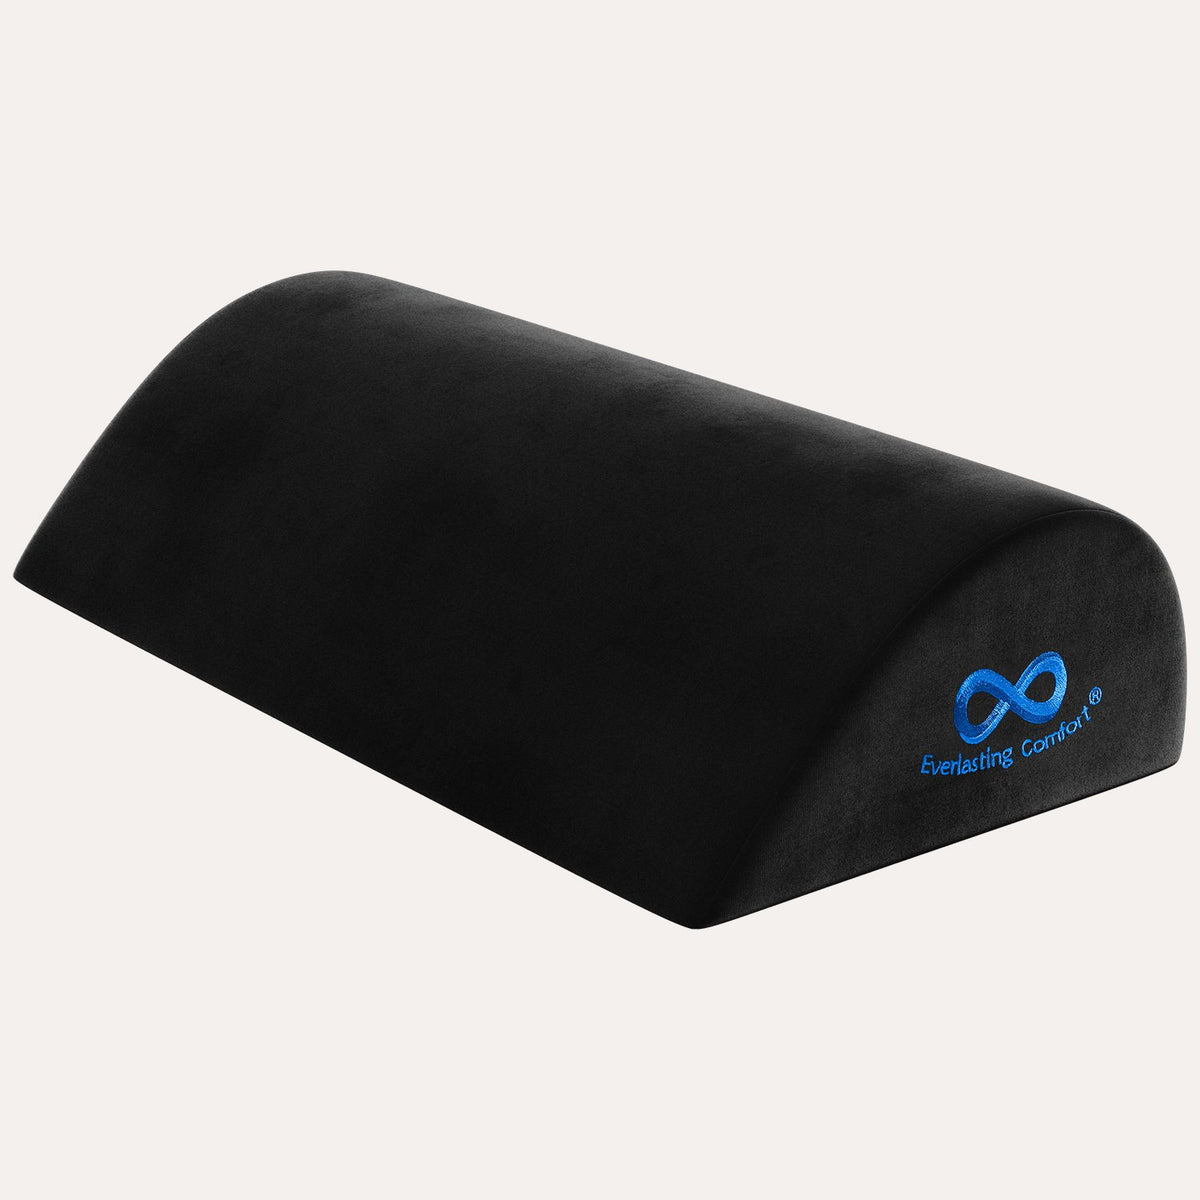 Under Desk Foot Rest-Adjustable Memory Foam Foot Stool Pillow, Teardrop  Curved